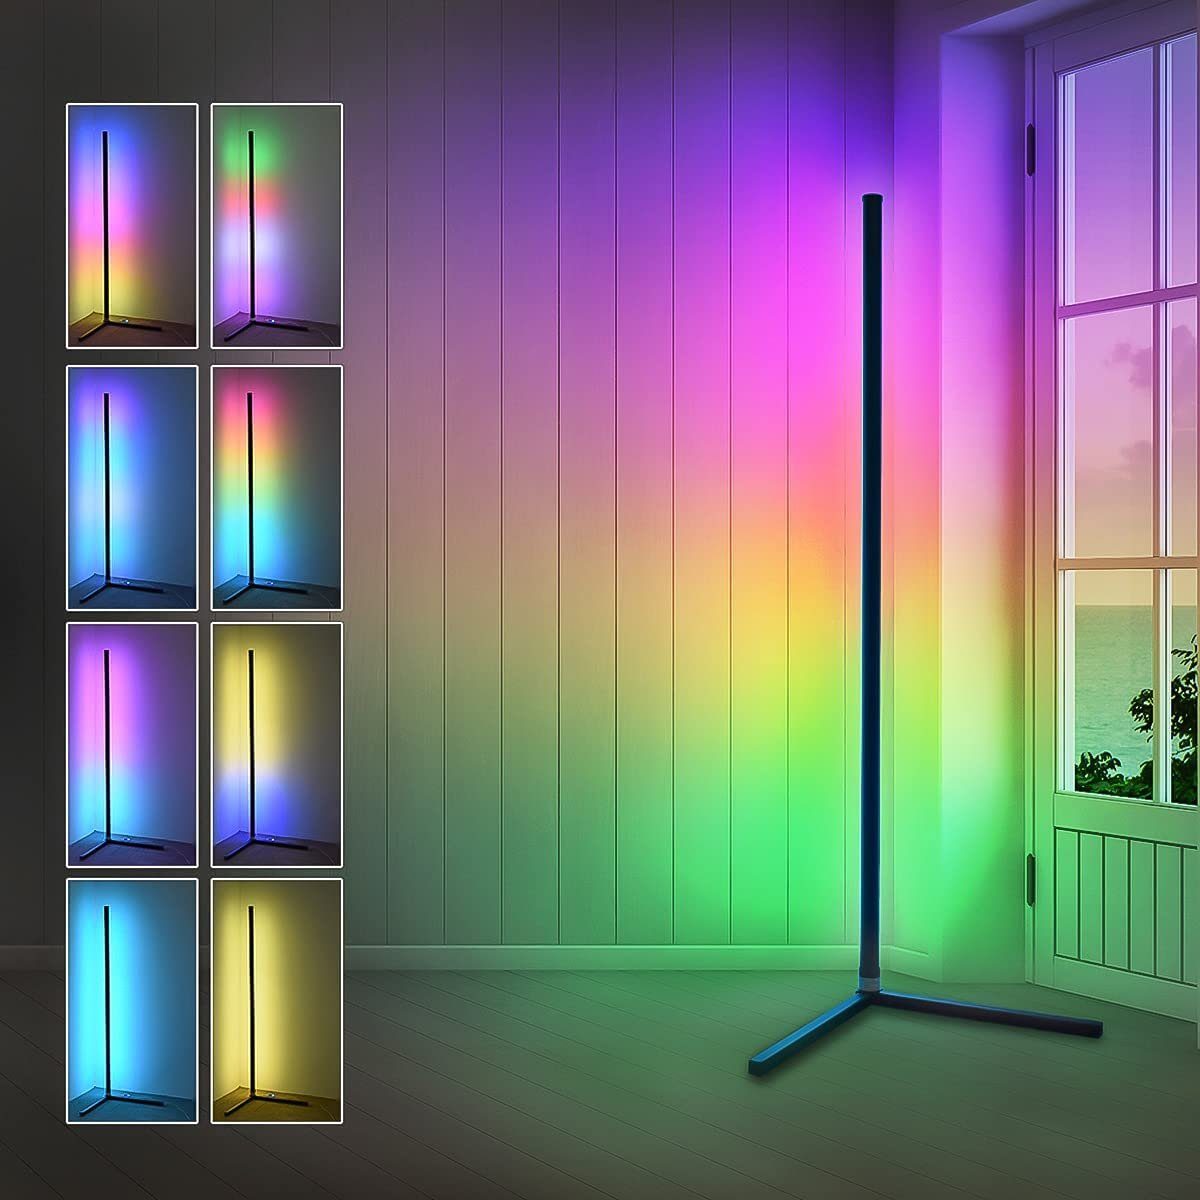 XIIW Stehlampe Modern Stehlampe LED RGB Standlampe Lichtsaeule Stehleuchte Dimmbar, Farbwechsel Ecklampe Musik und Mikrofonmodus